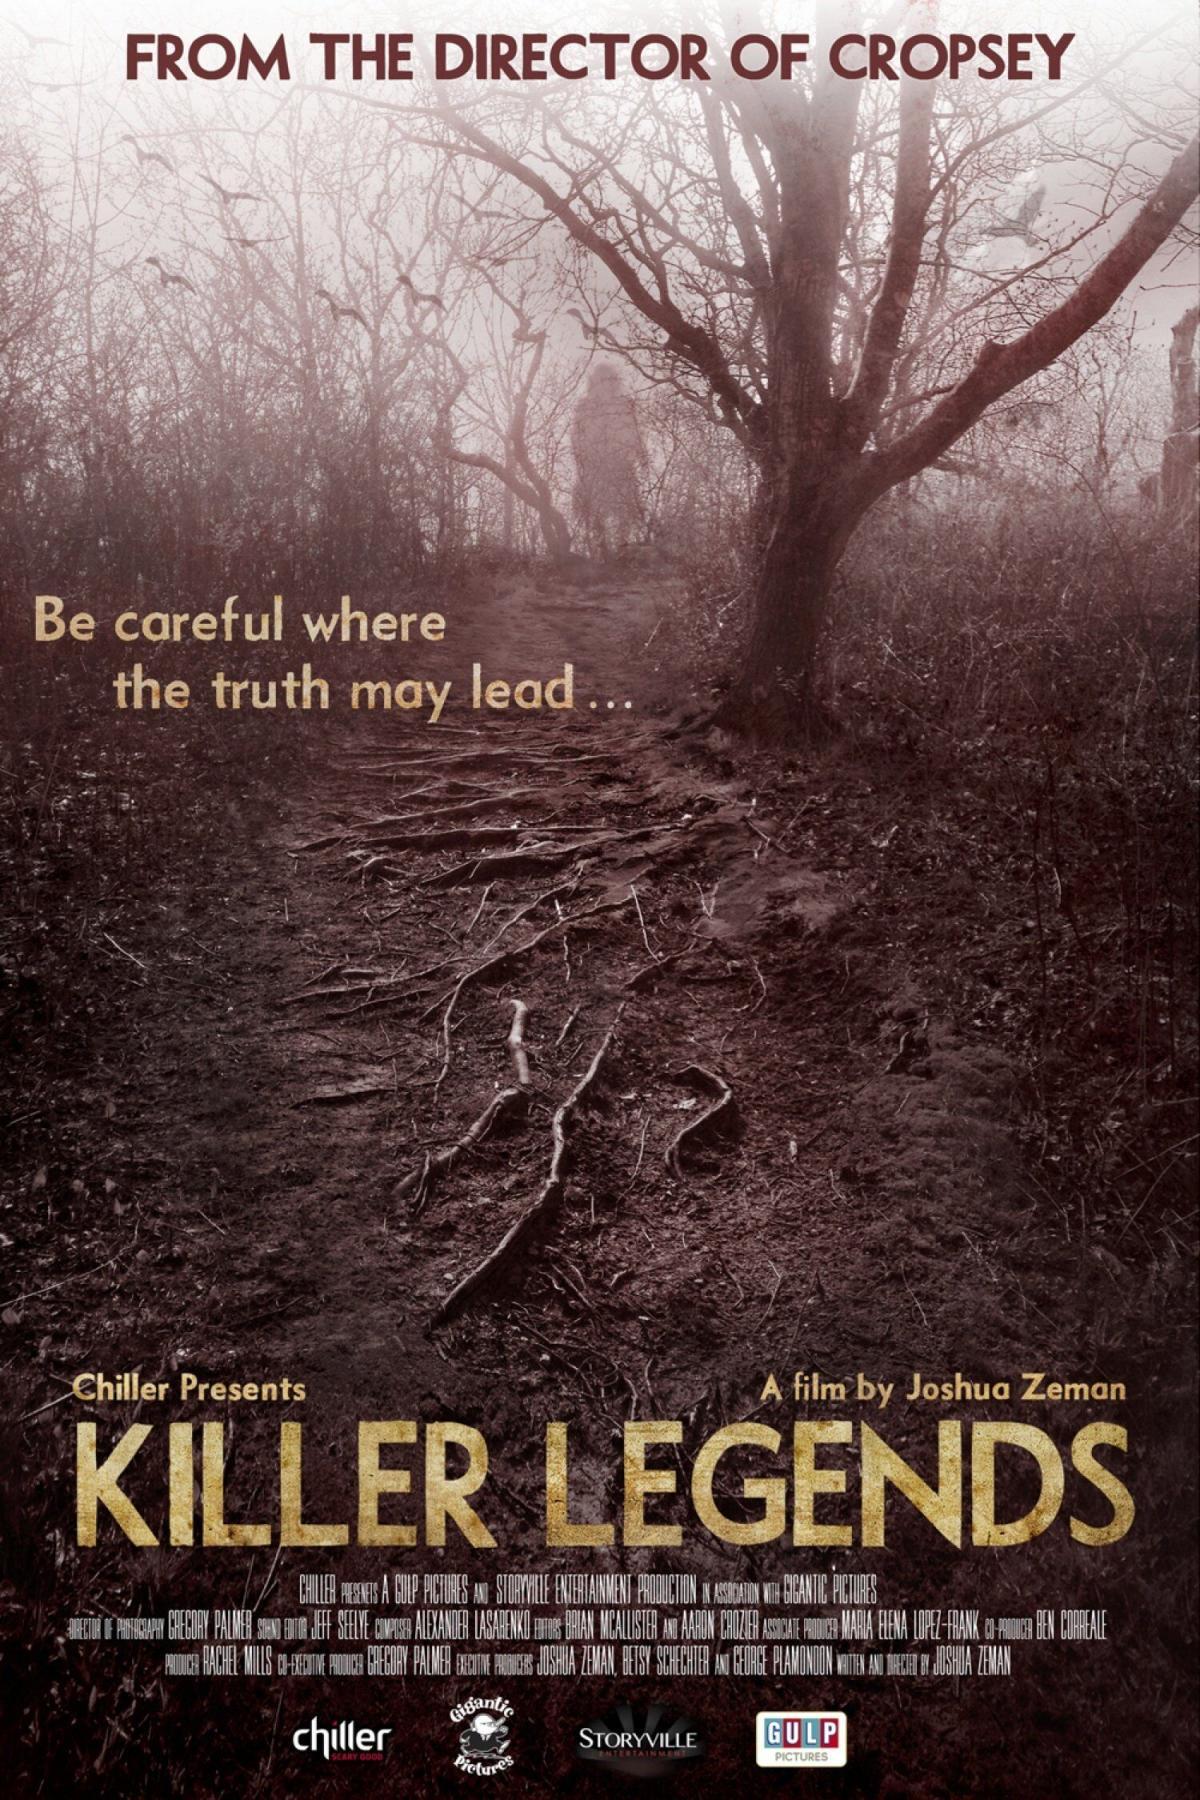 Killer-Legends-scary-documentary-poster